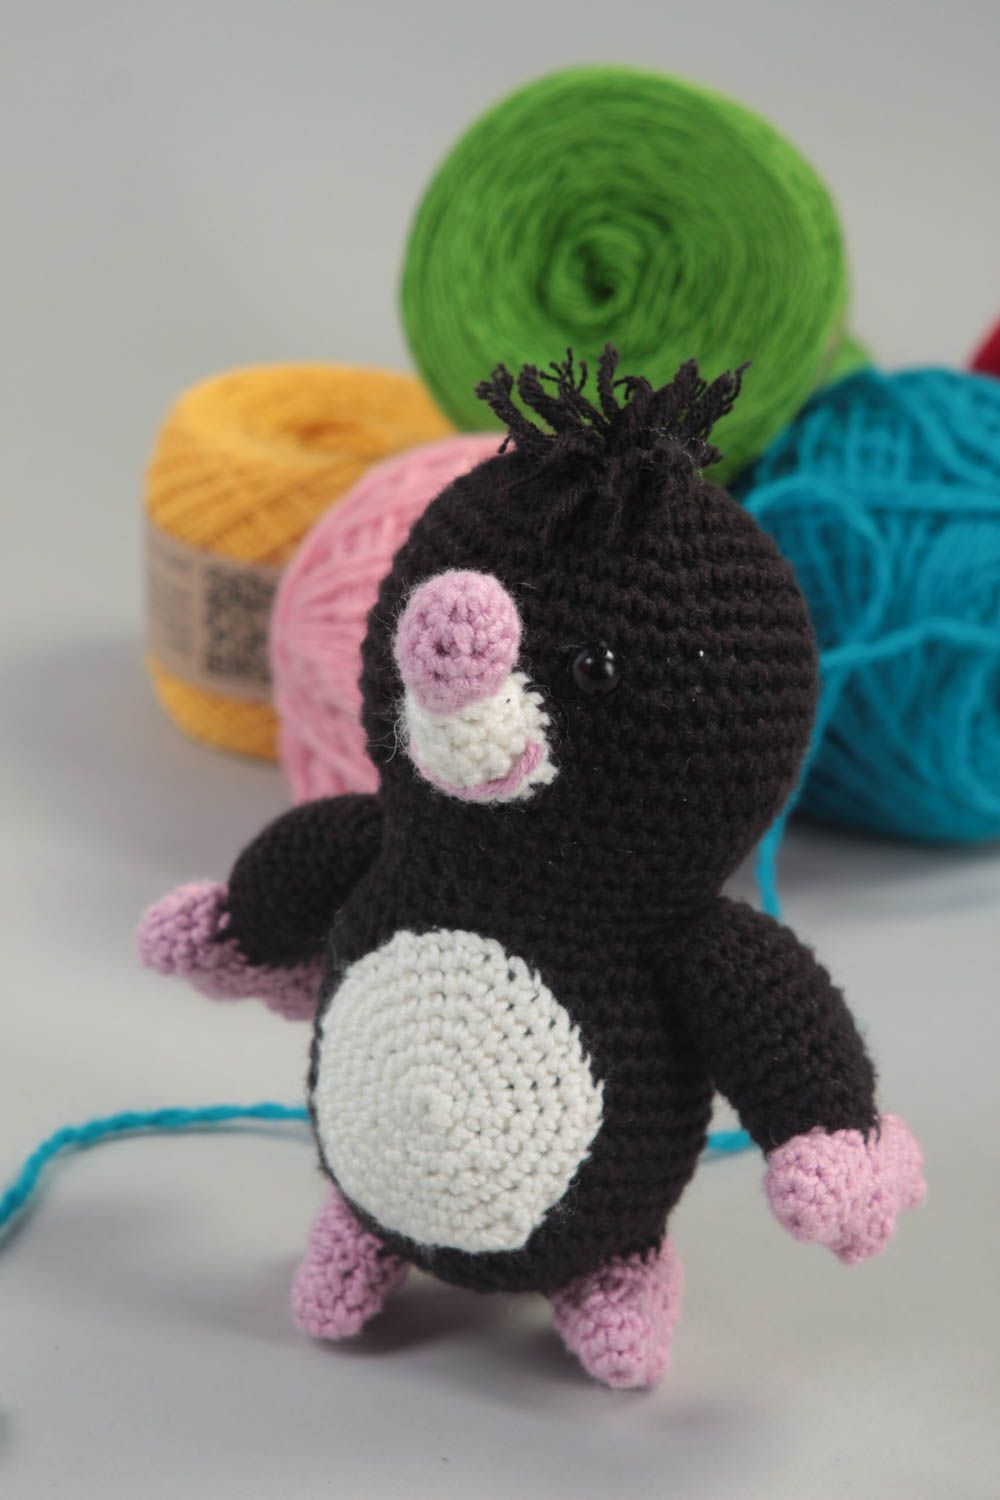 Miniature handmade soft toy stuffed toy crochet toy birthday gift ideas photo 1